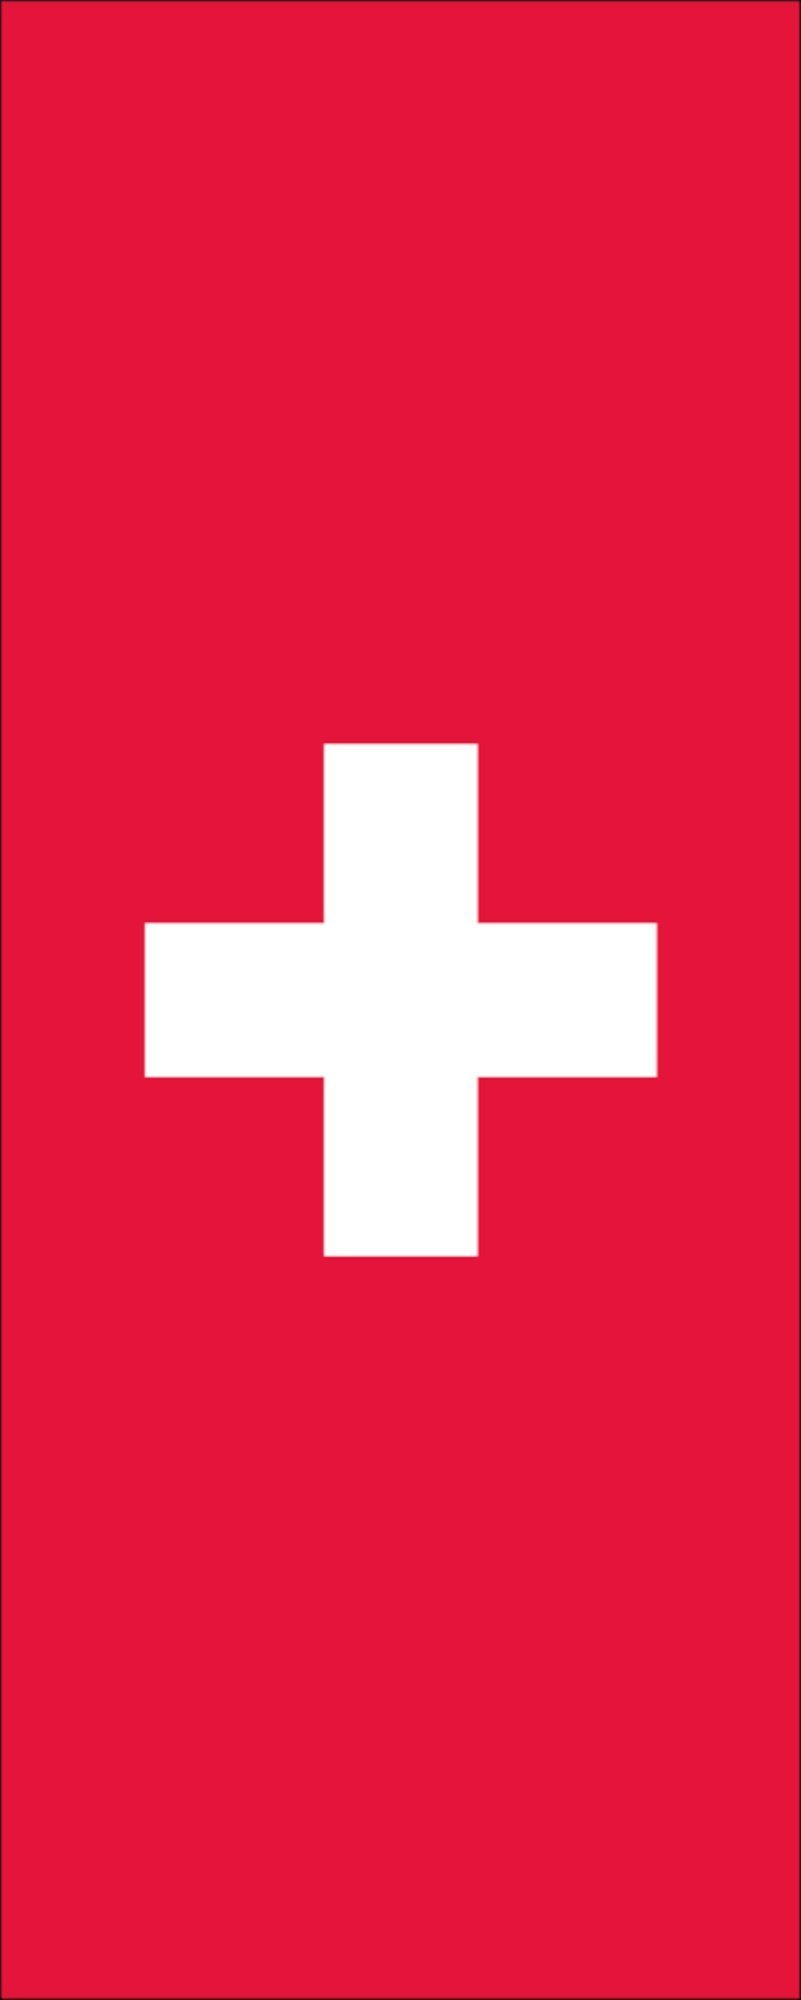 Hochformat Flagge Schweiz flaggenmeer g/m² 160